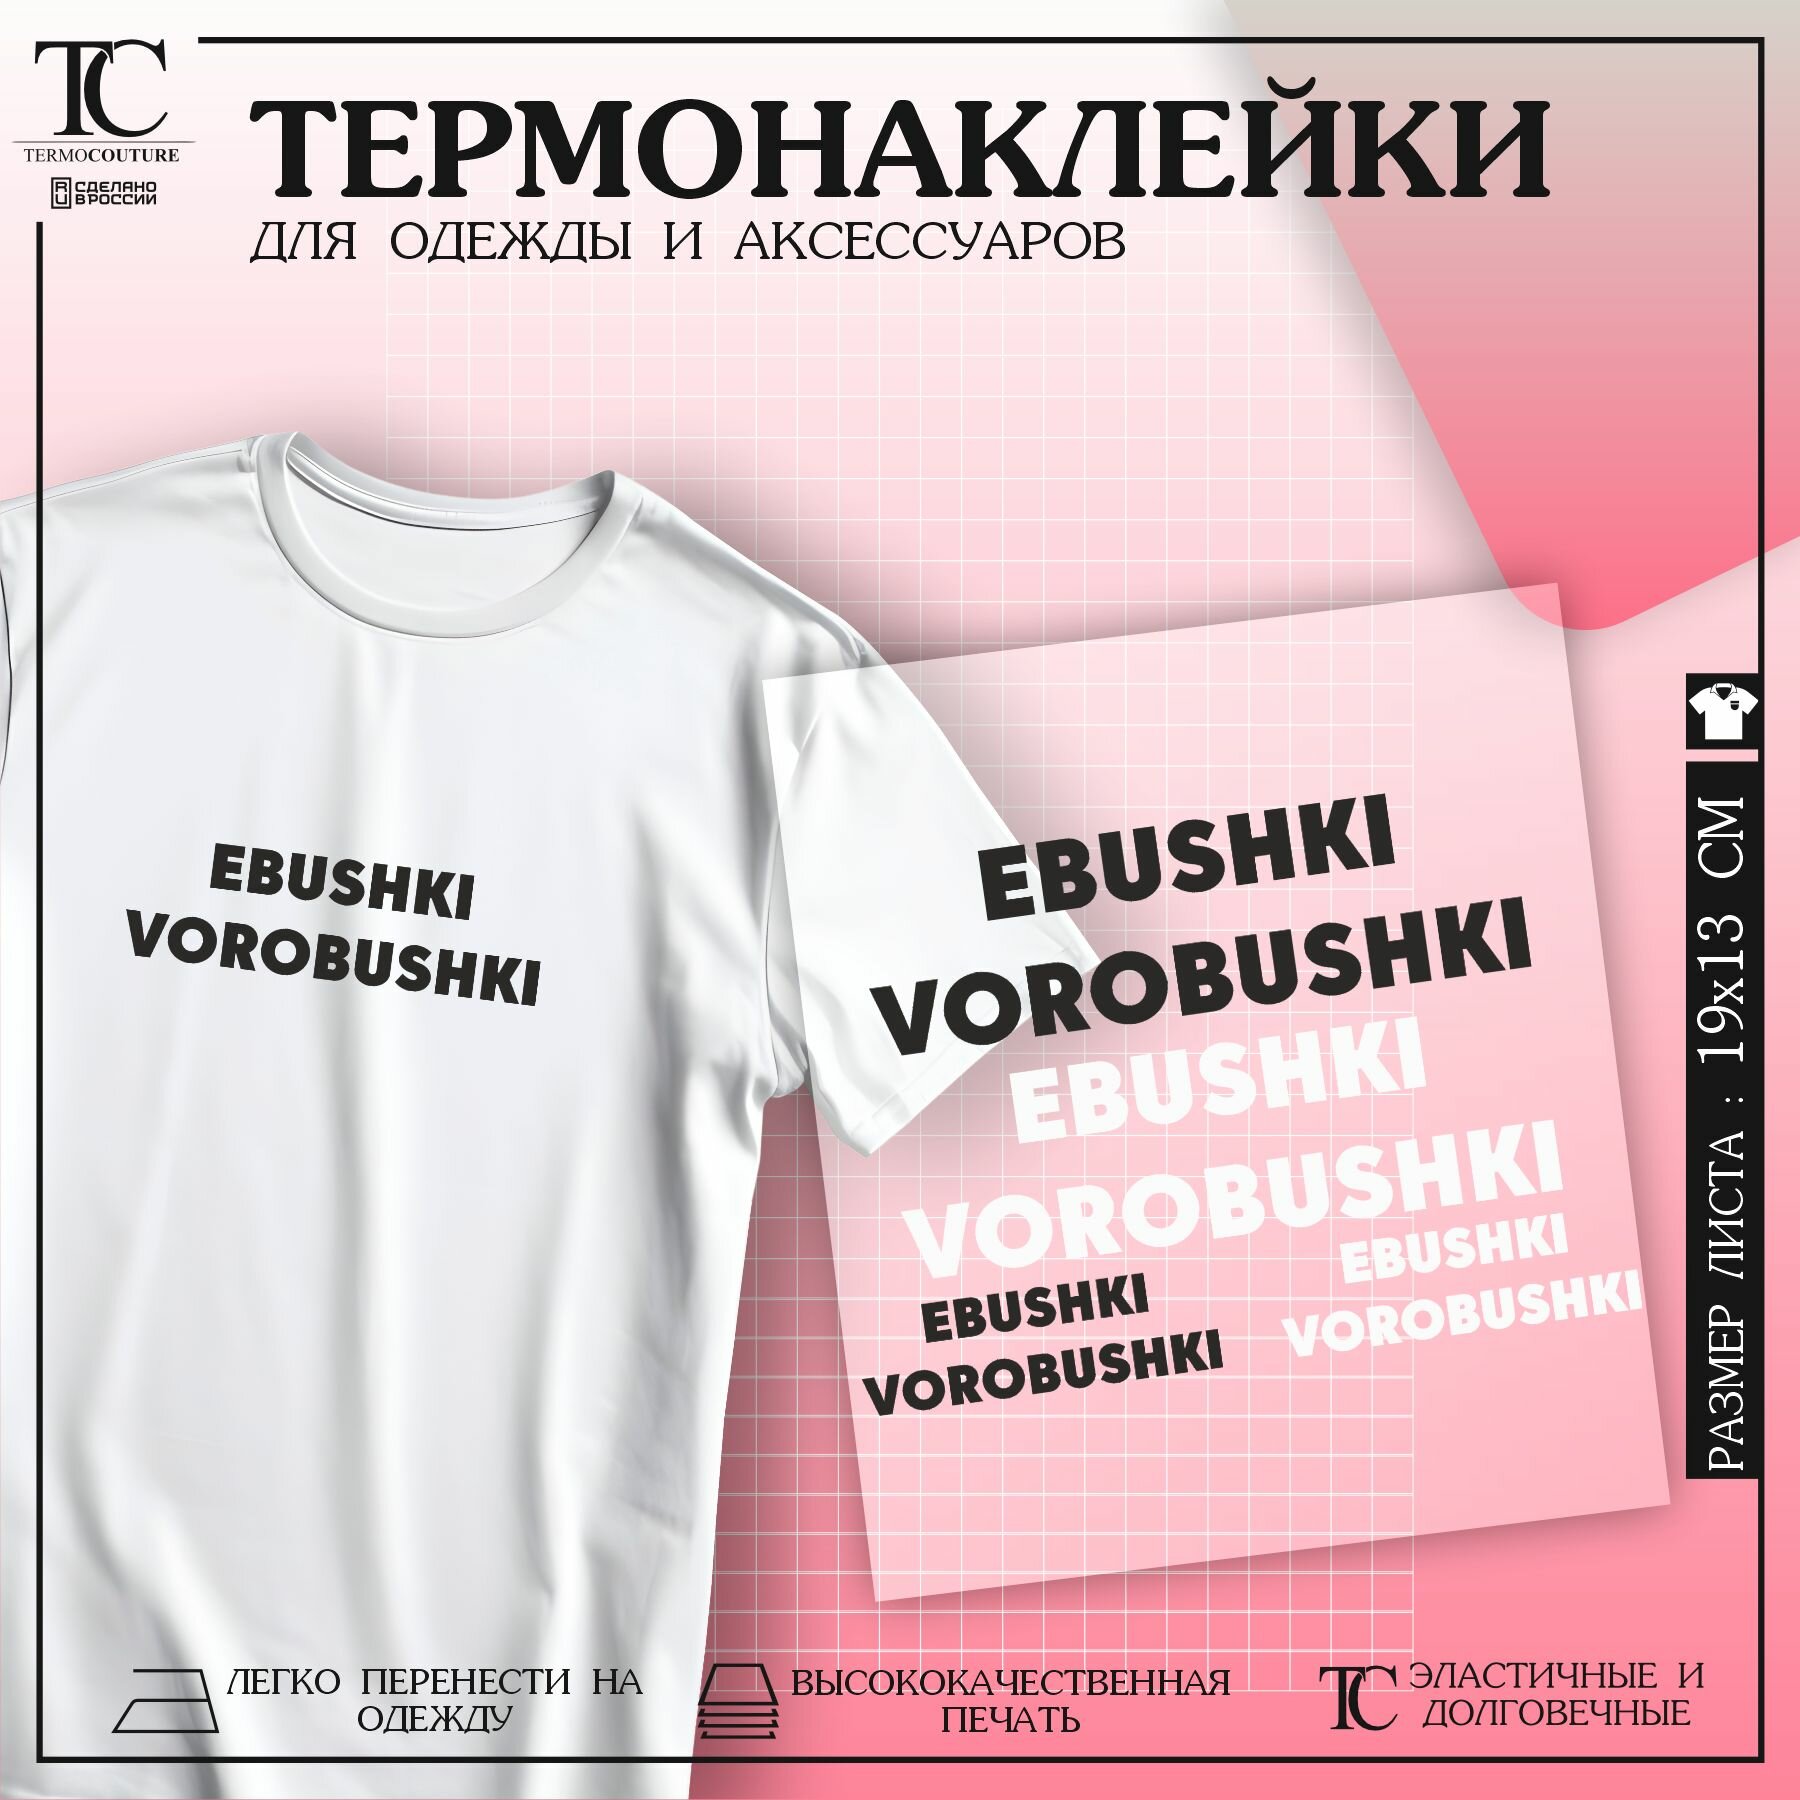 Термонаклейка на одежду EBUSHKI VOROBUSHKI